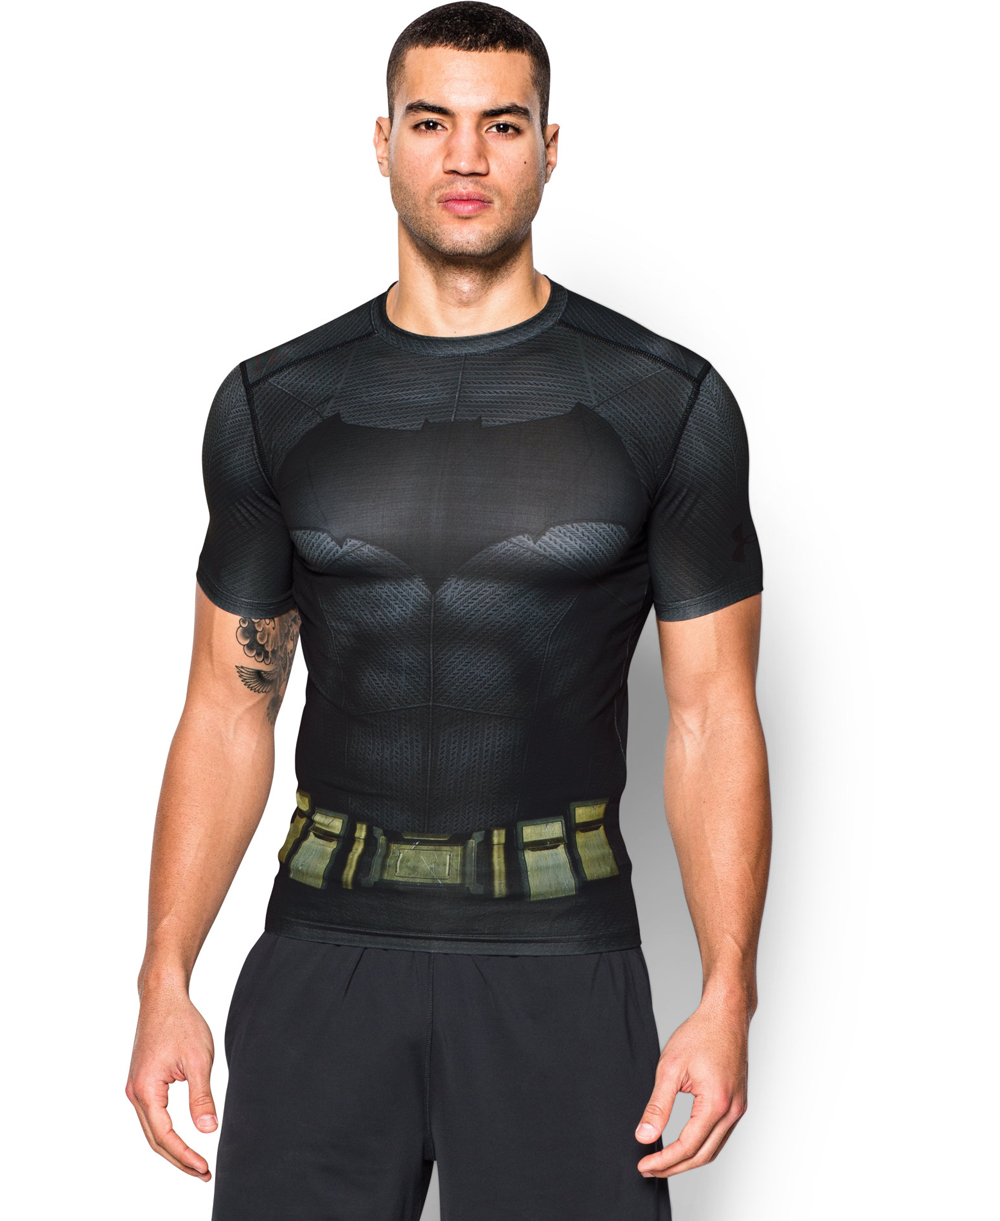 under armour compression shirt